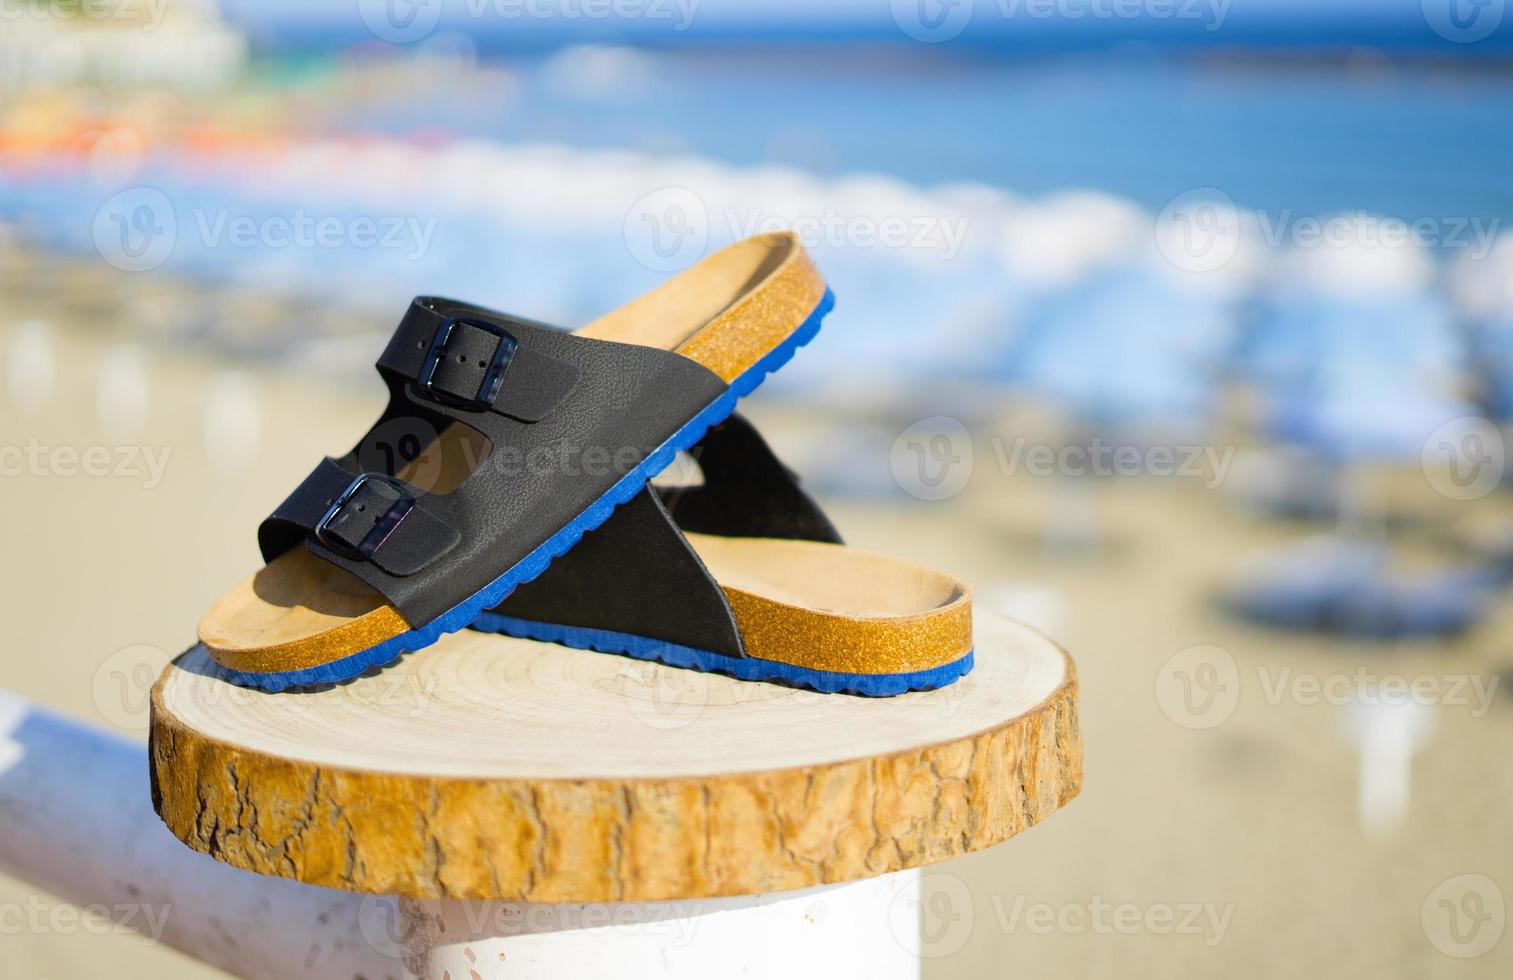 azul con sandalias de hombre negro sobre un tronco de madera en verano foto